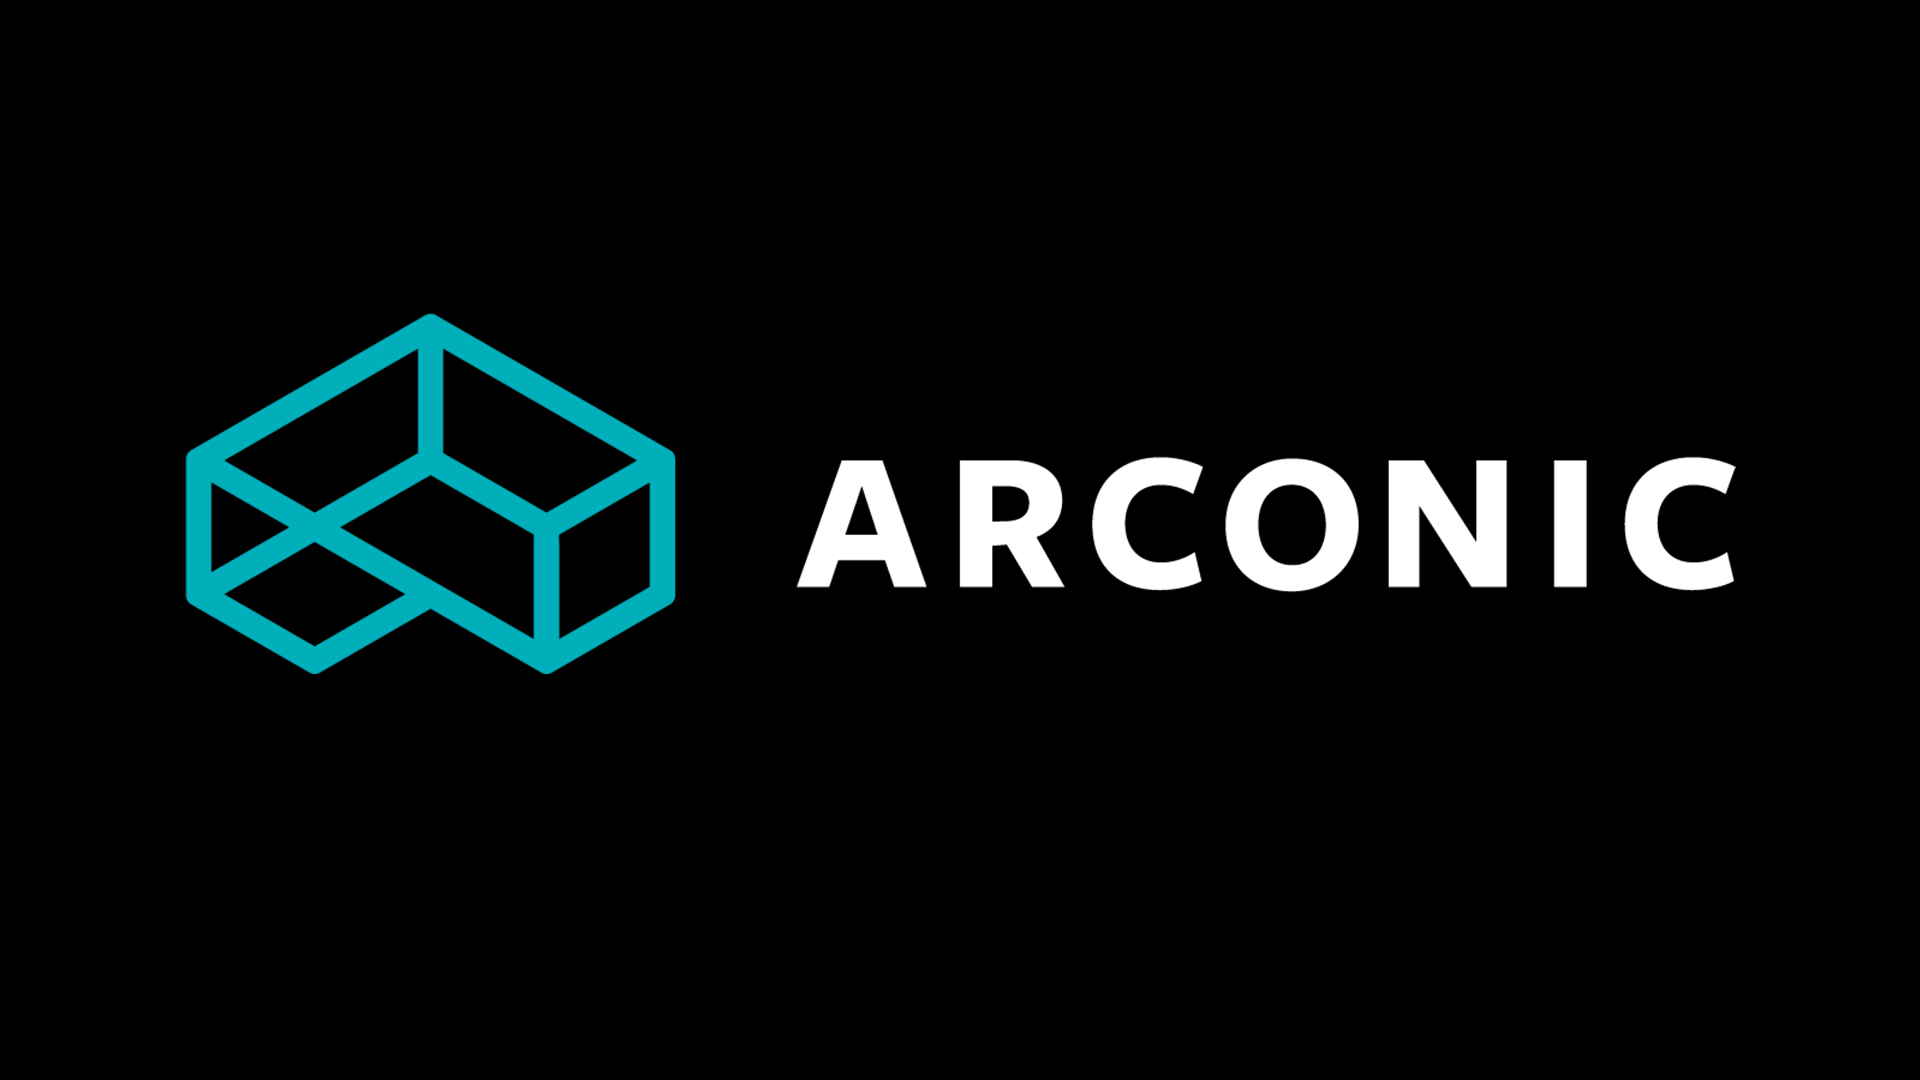 Arconic Inc